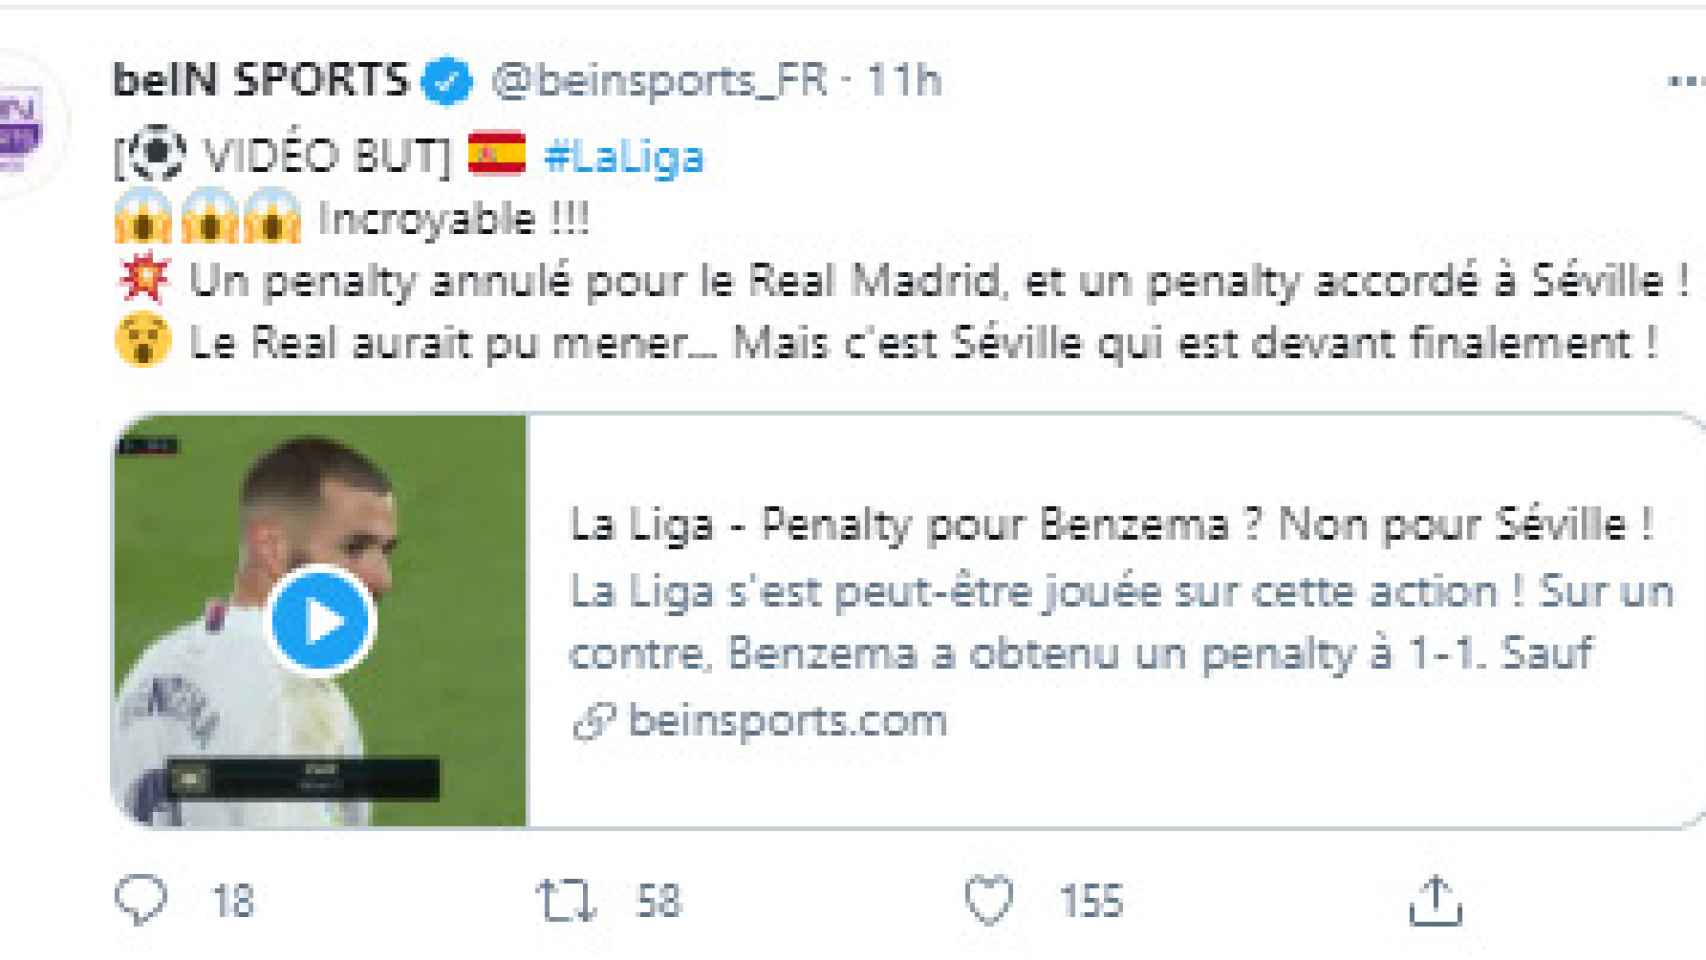 El tuit de BeIN Sports Francia sobre el penalti de Militao en el Real Madrid - Sevilla